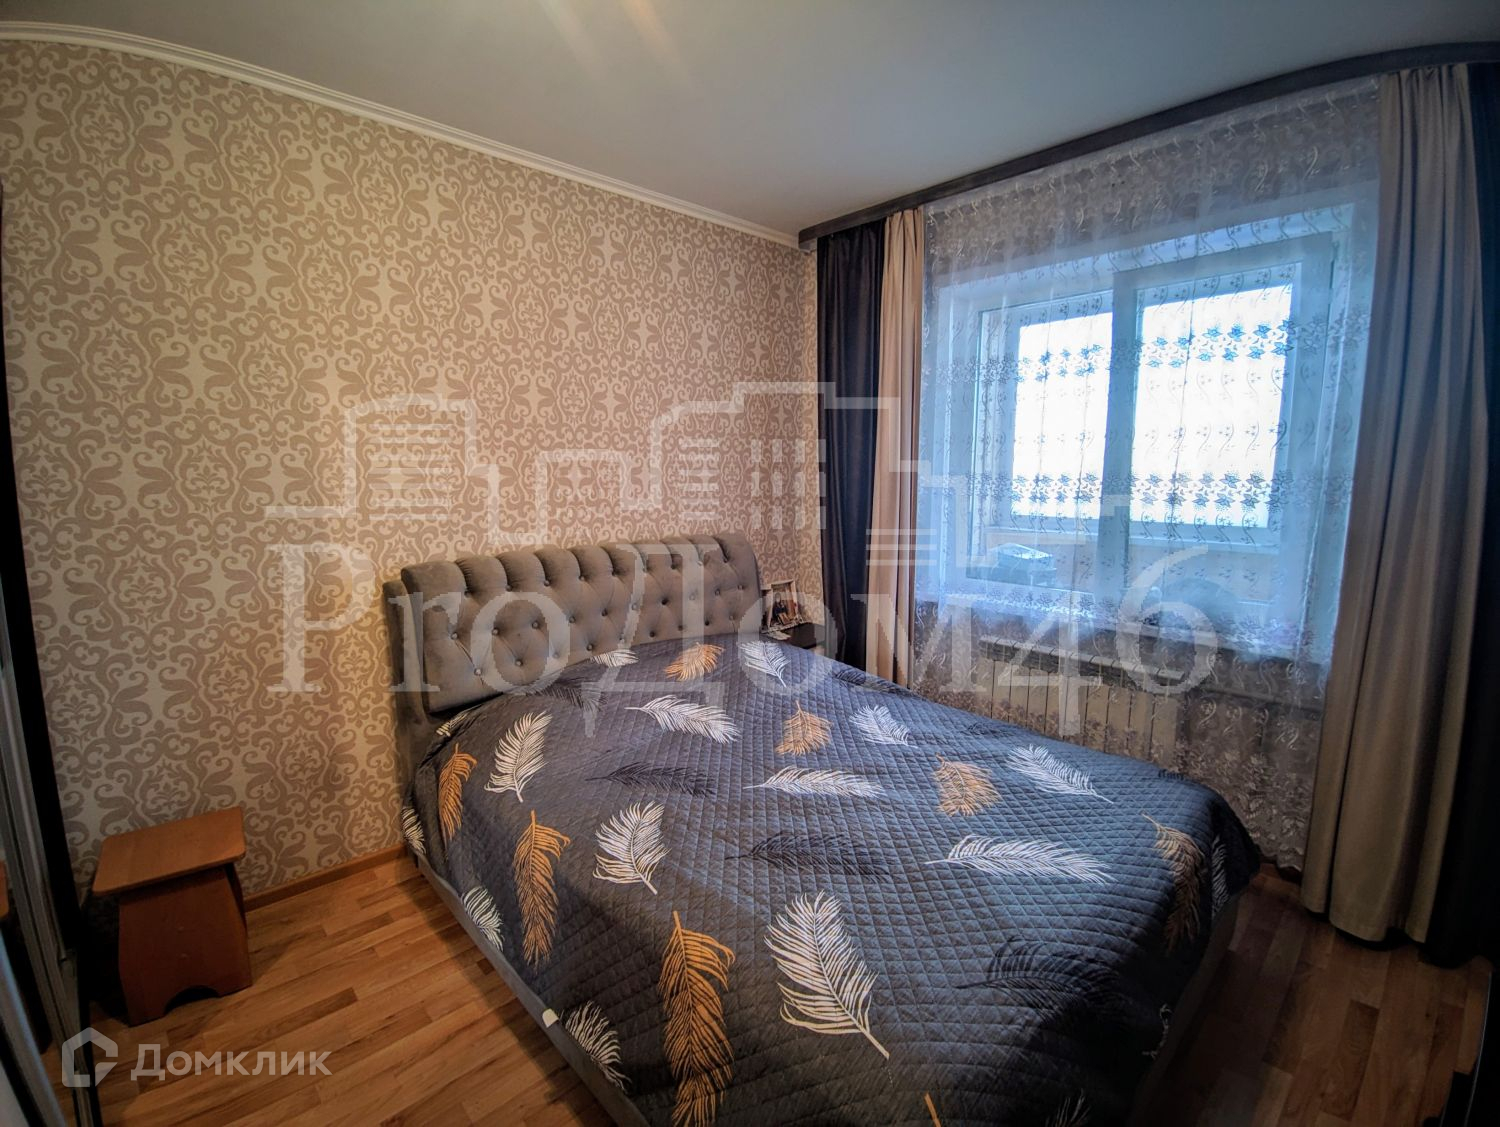 Курск улица Косухина новый район купить 4х комнатную квартиру.